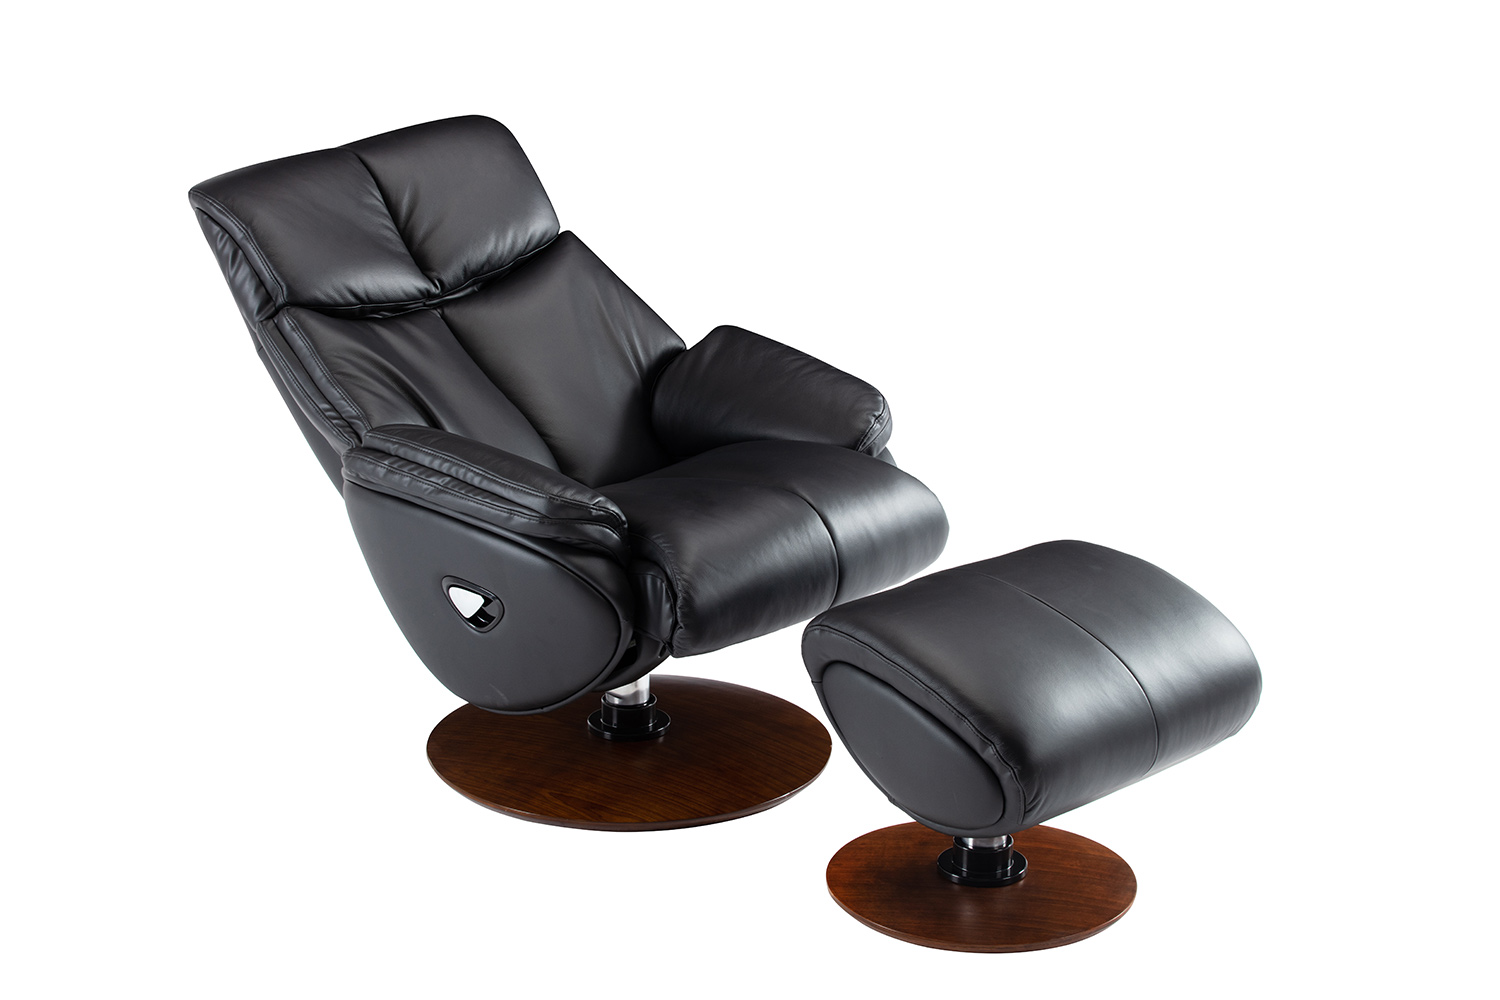 Barcalounger Alicia Pedestal Recliner Chair and Ottoman - Capri Black/Leather match